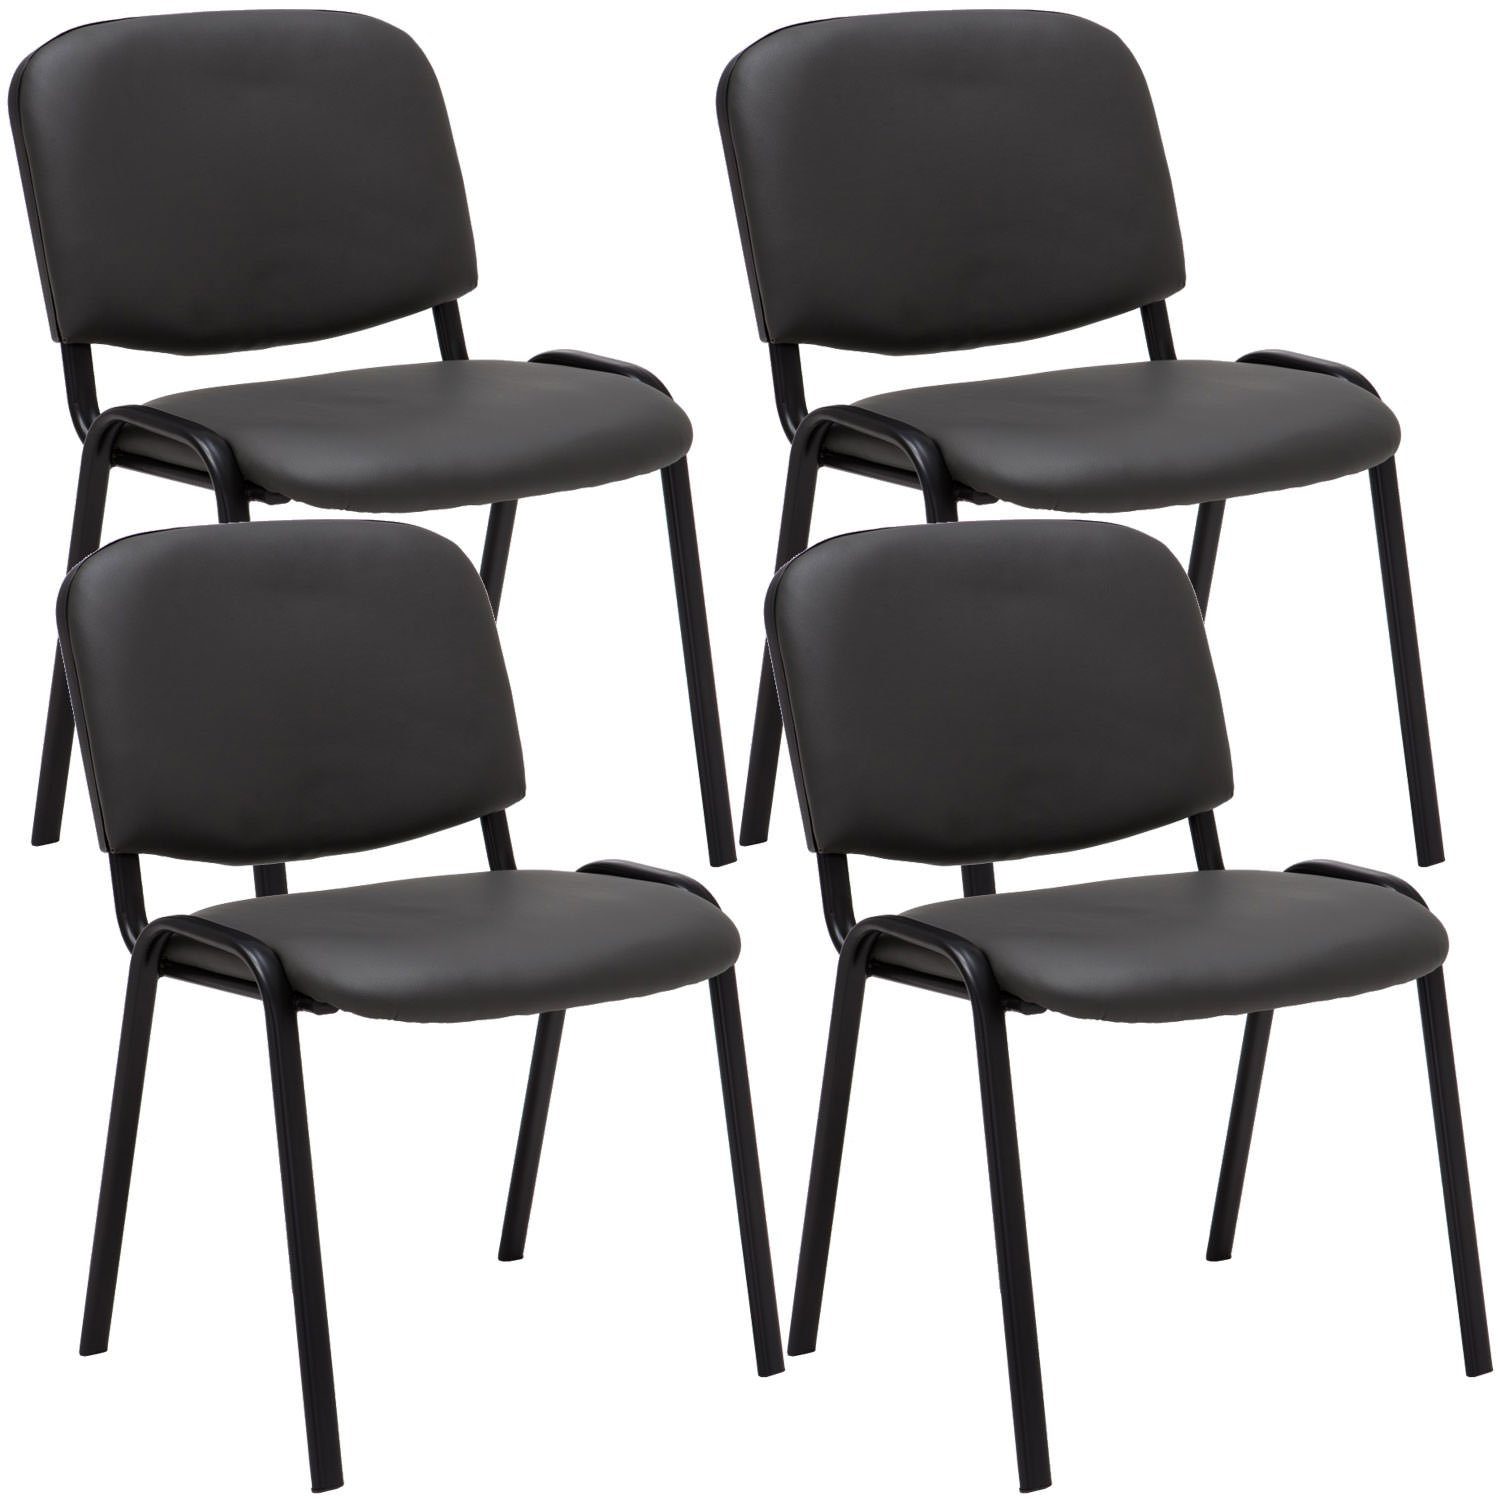 TPFLiving Besucherstuhl Keen mit hochwertiger Polsterung - Konferenzstuhl (Besprechungsstuhl - Warteraumstuhl - Messestuhl, 4 St), Gestell: Metall matt schwarz - Sitzfläche: Kunstleder grau